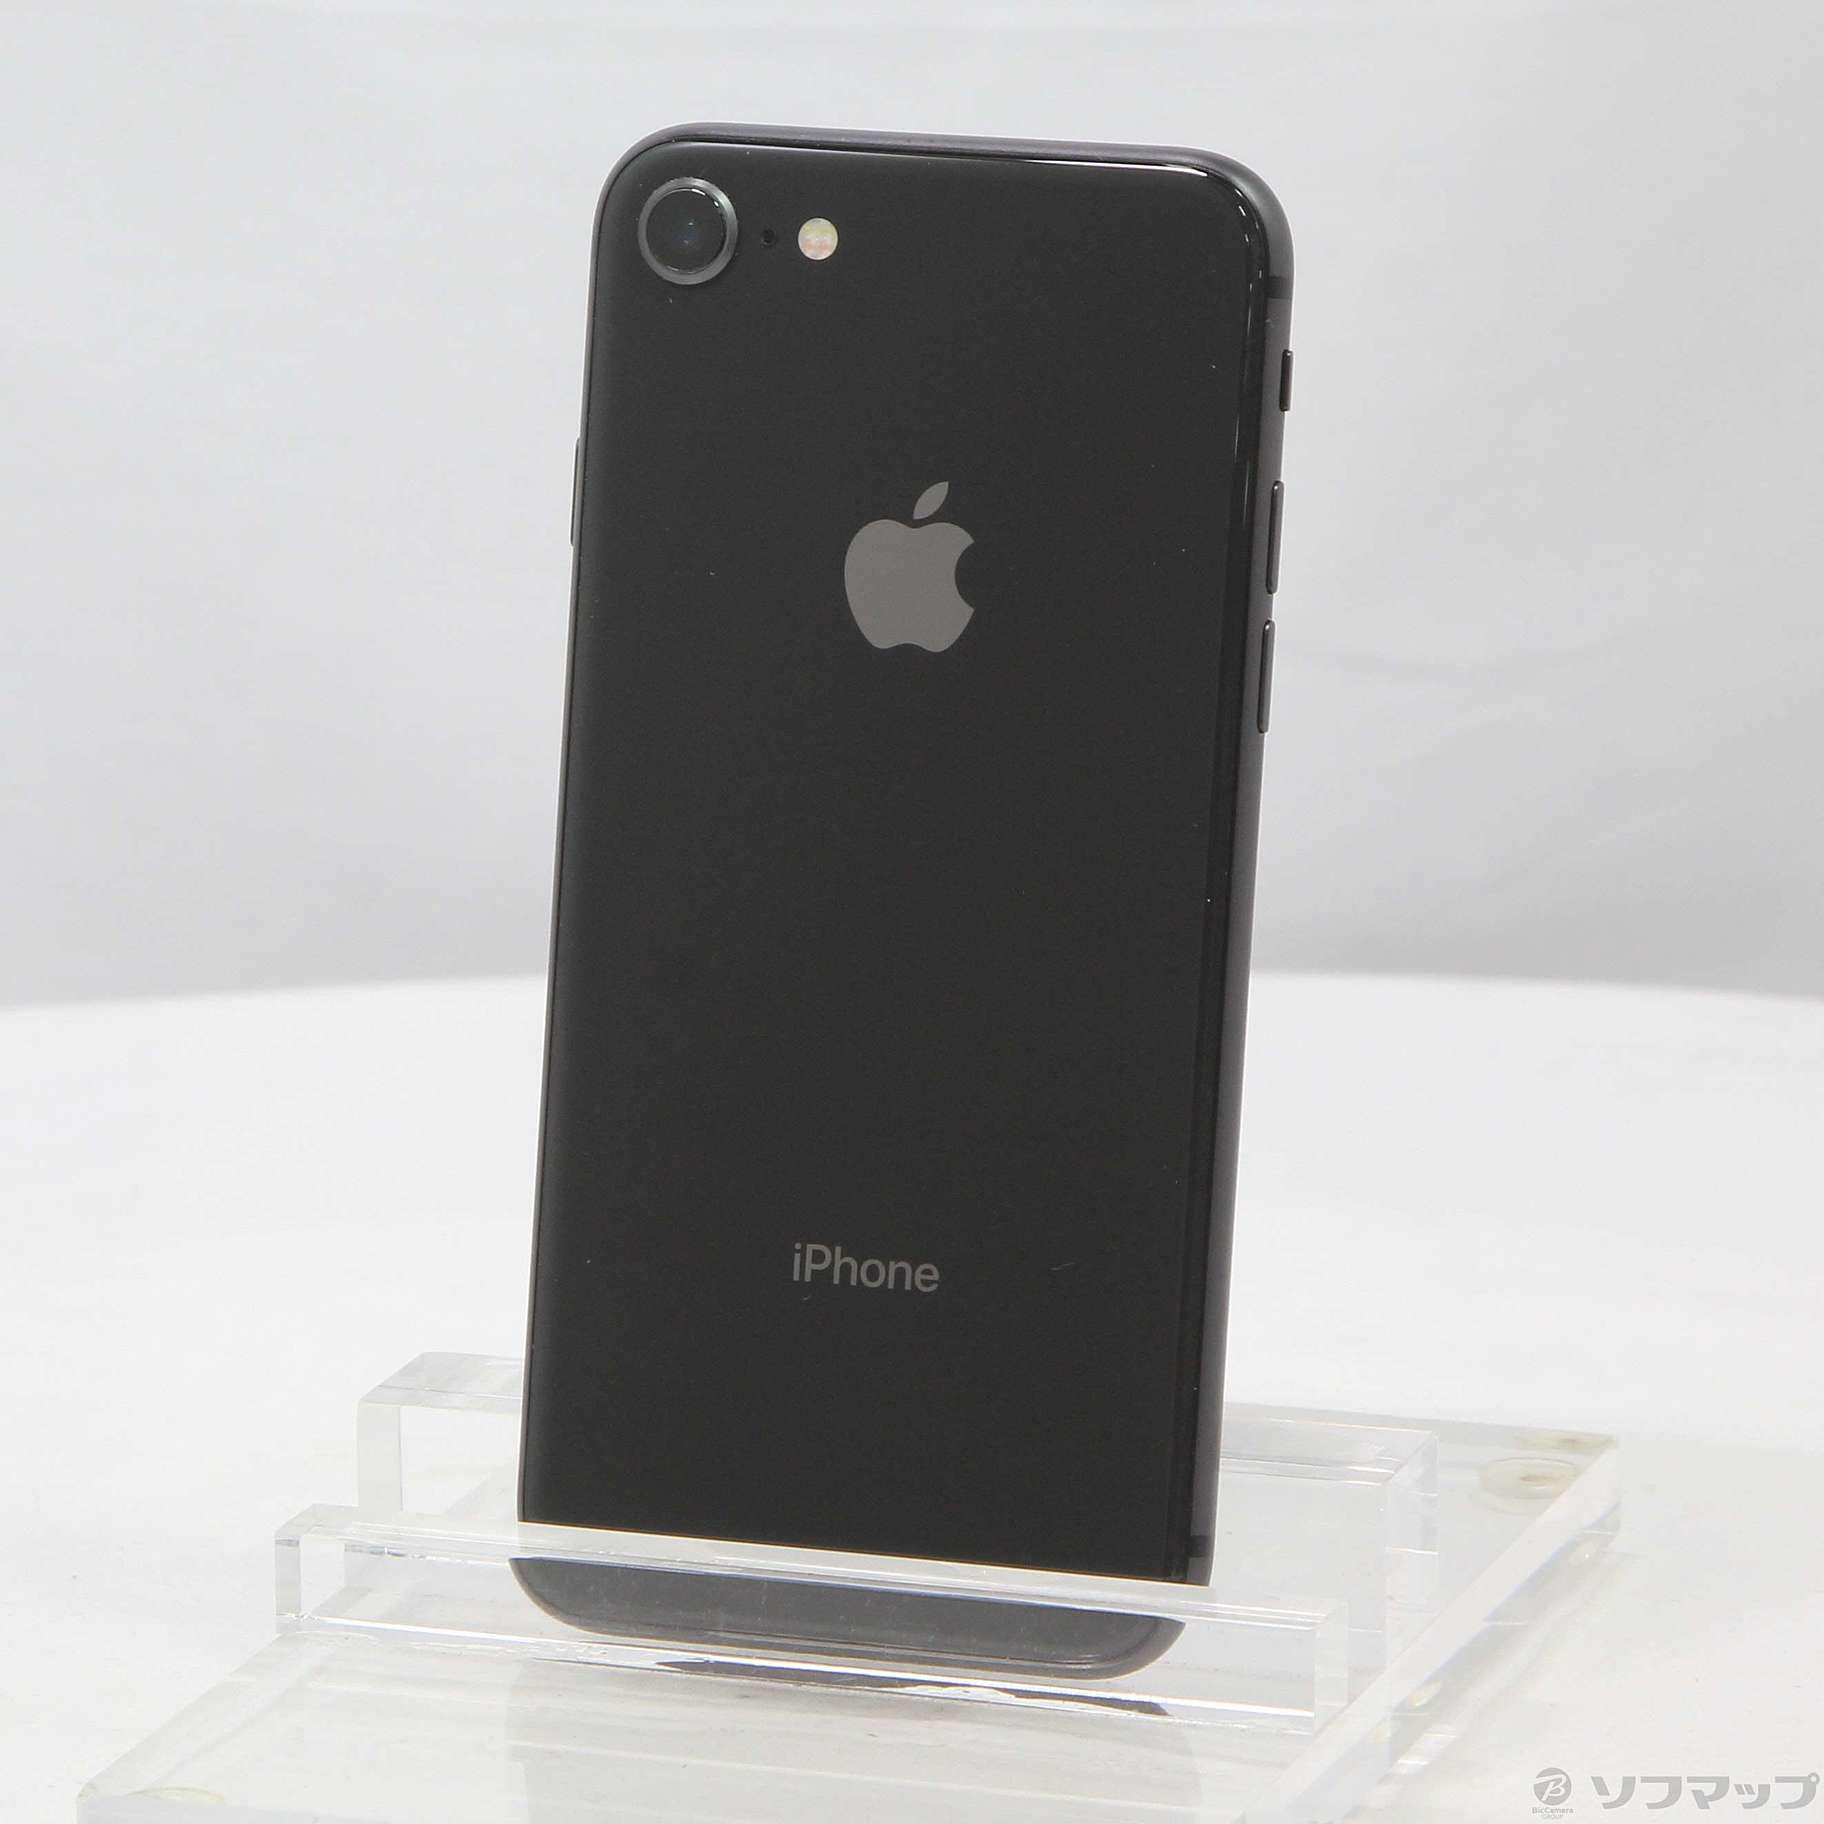 iPhoneiPhone 8 Space Gray 256GB SIMフリー 本体 _501